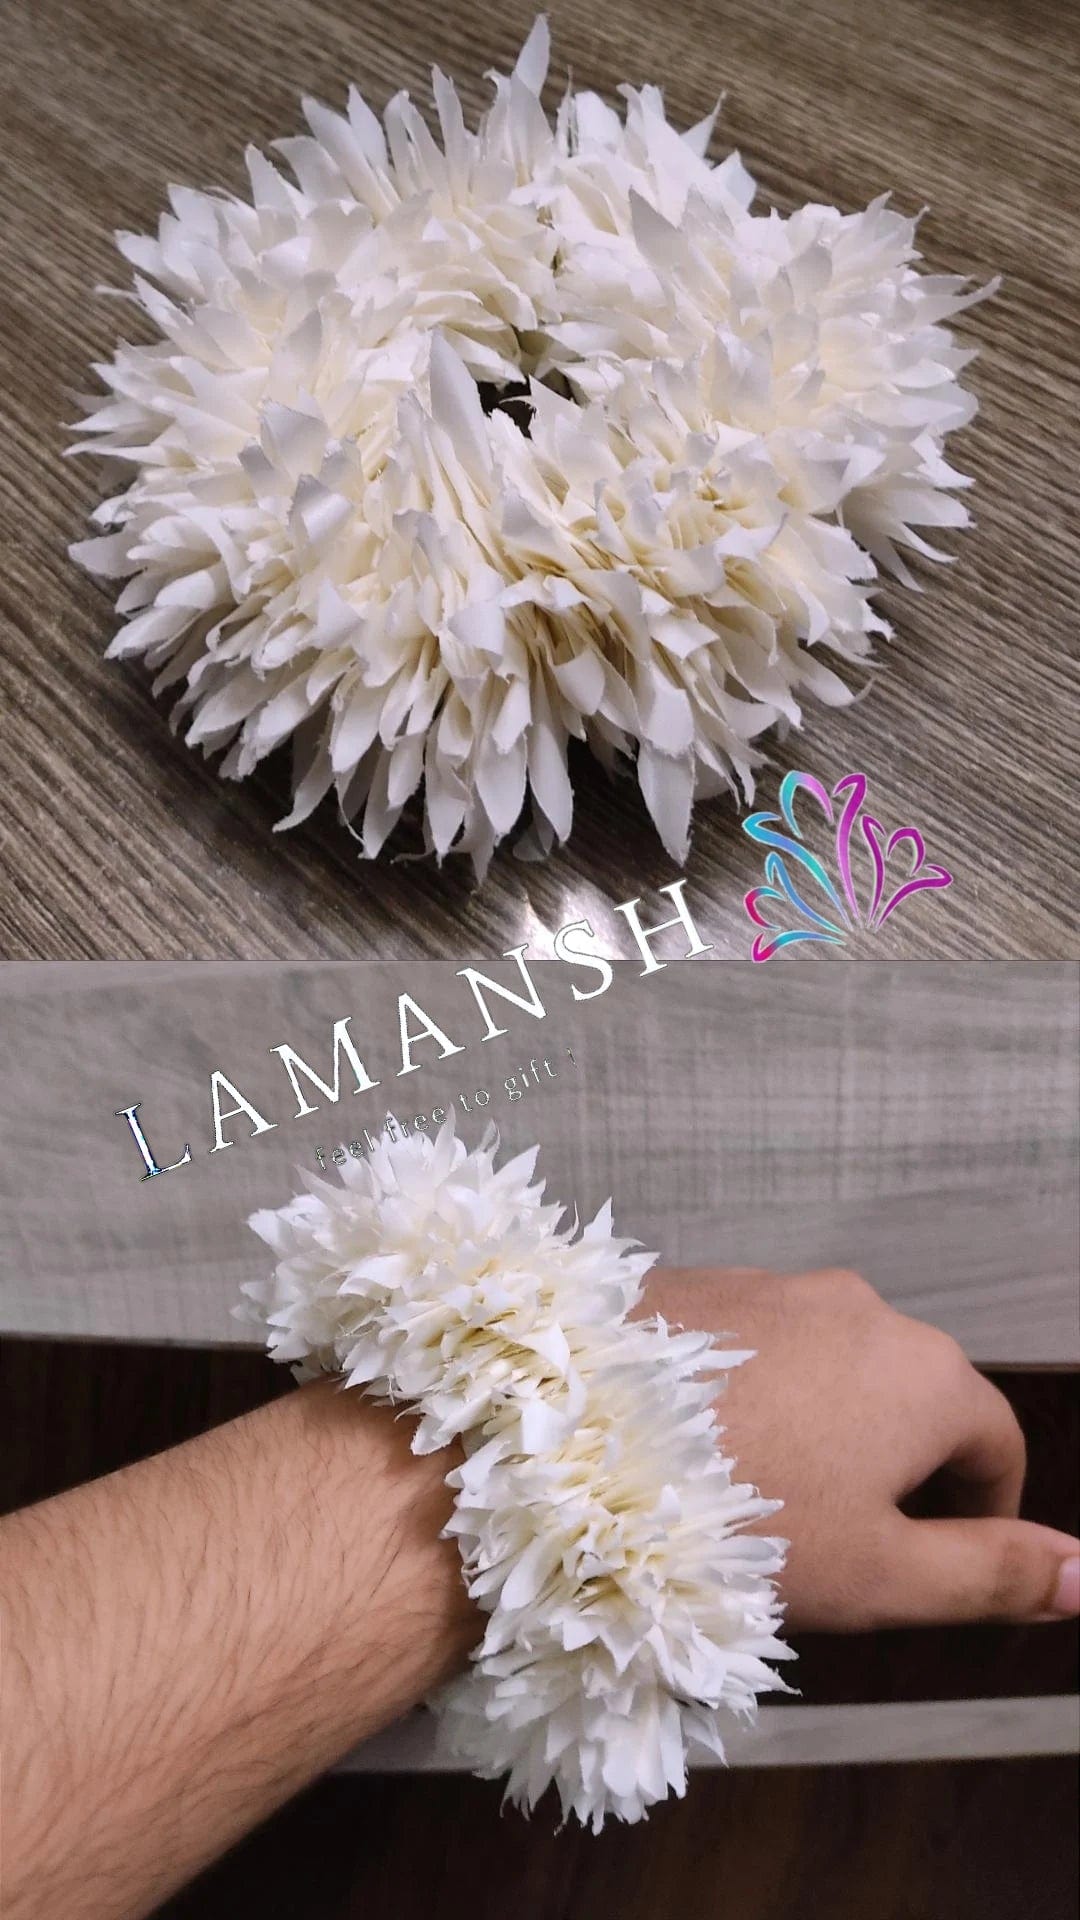 Lamansh LAMANSH® Elastic Jasmine Flowers Hand Bracelets for Haldi & Mehendi ceremony | Favors for Bridesmaids